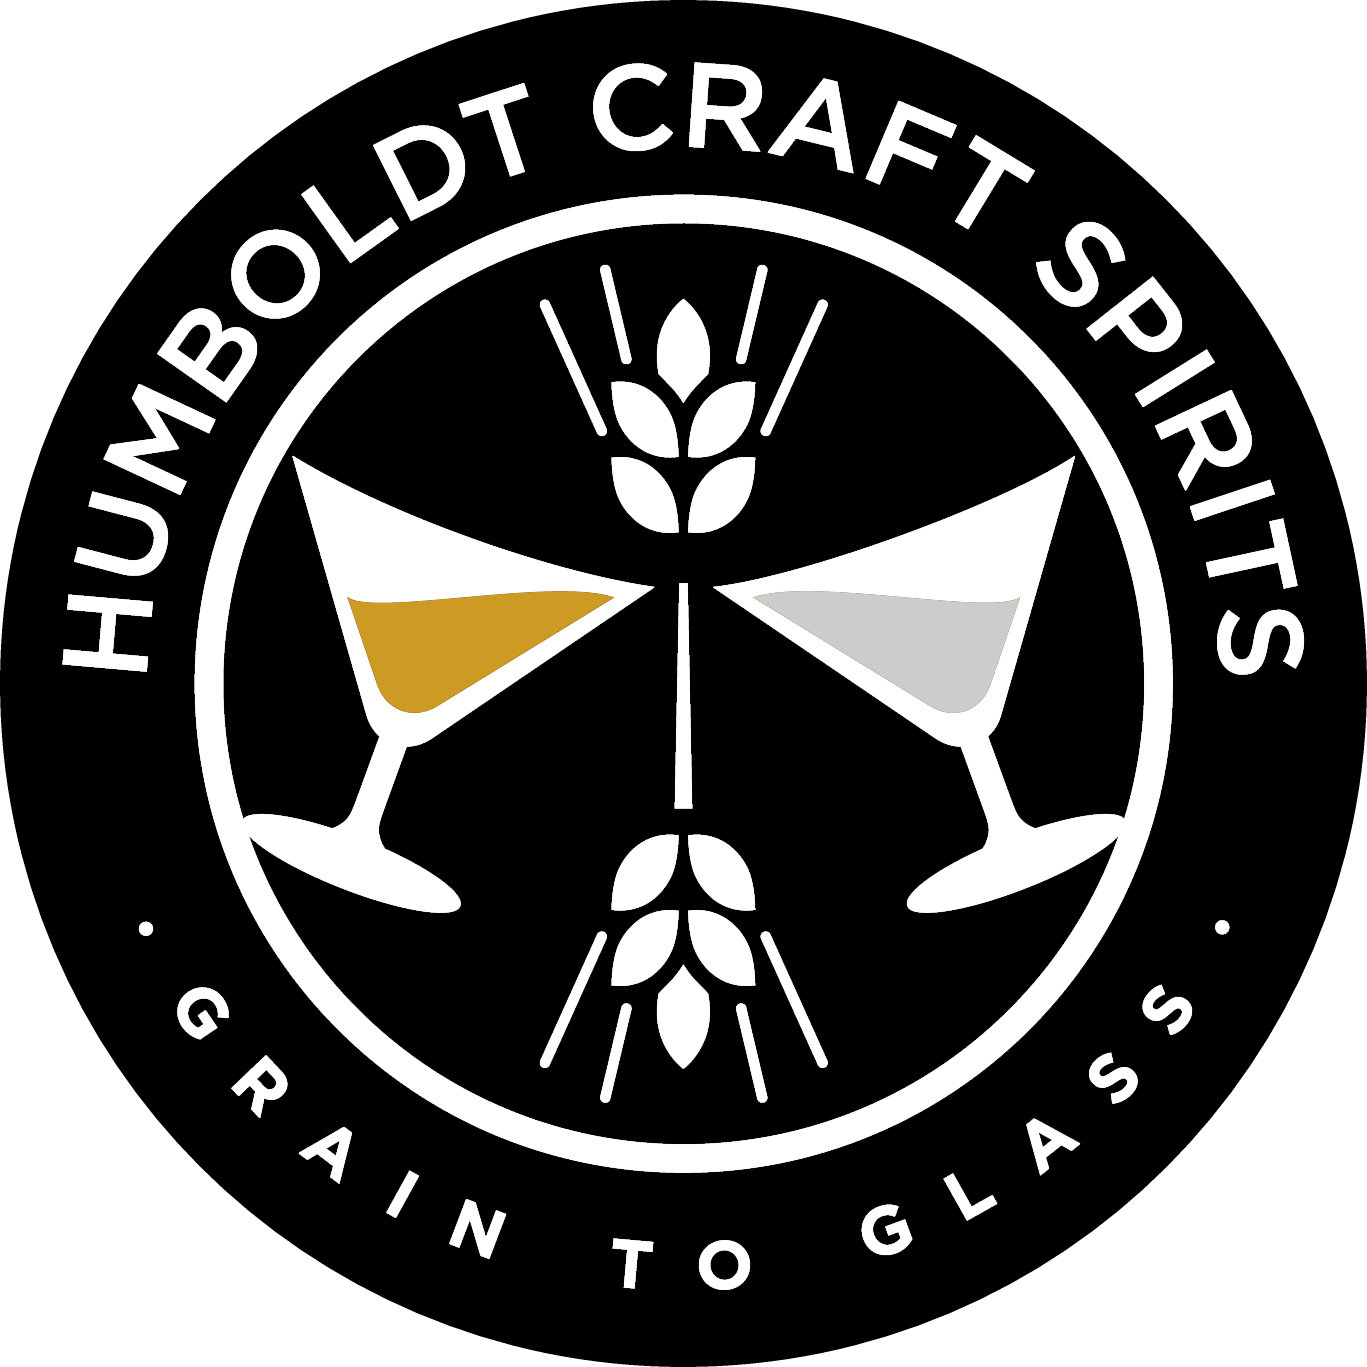 Humboldt Craft Spirits